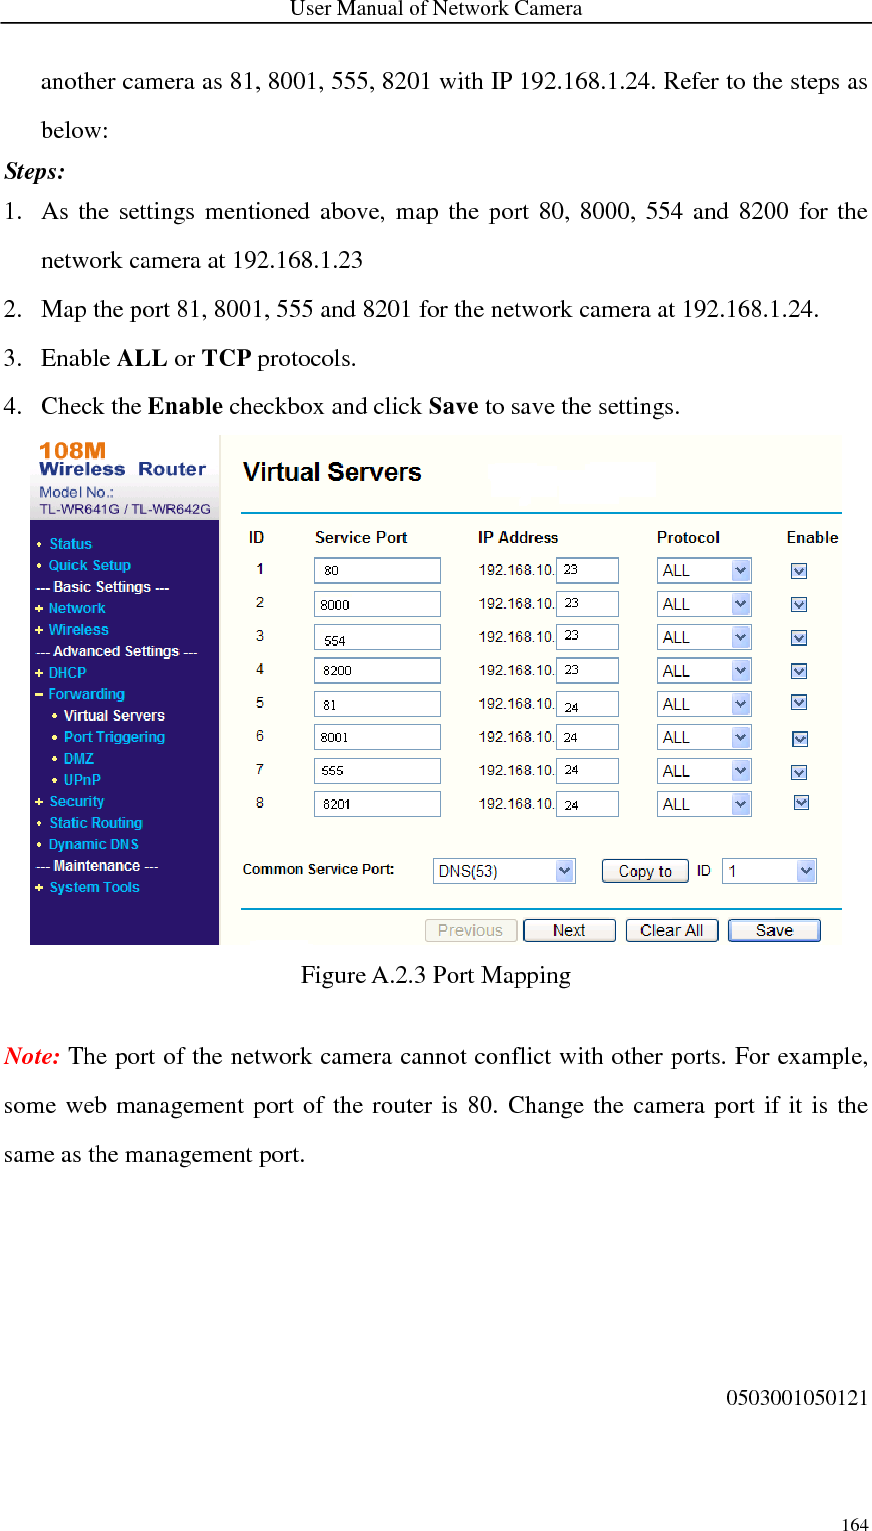 User Manual of Network Camera 165                          